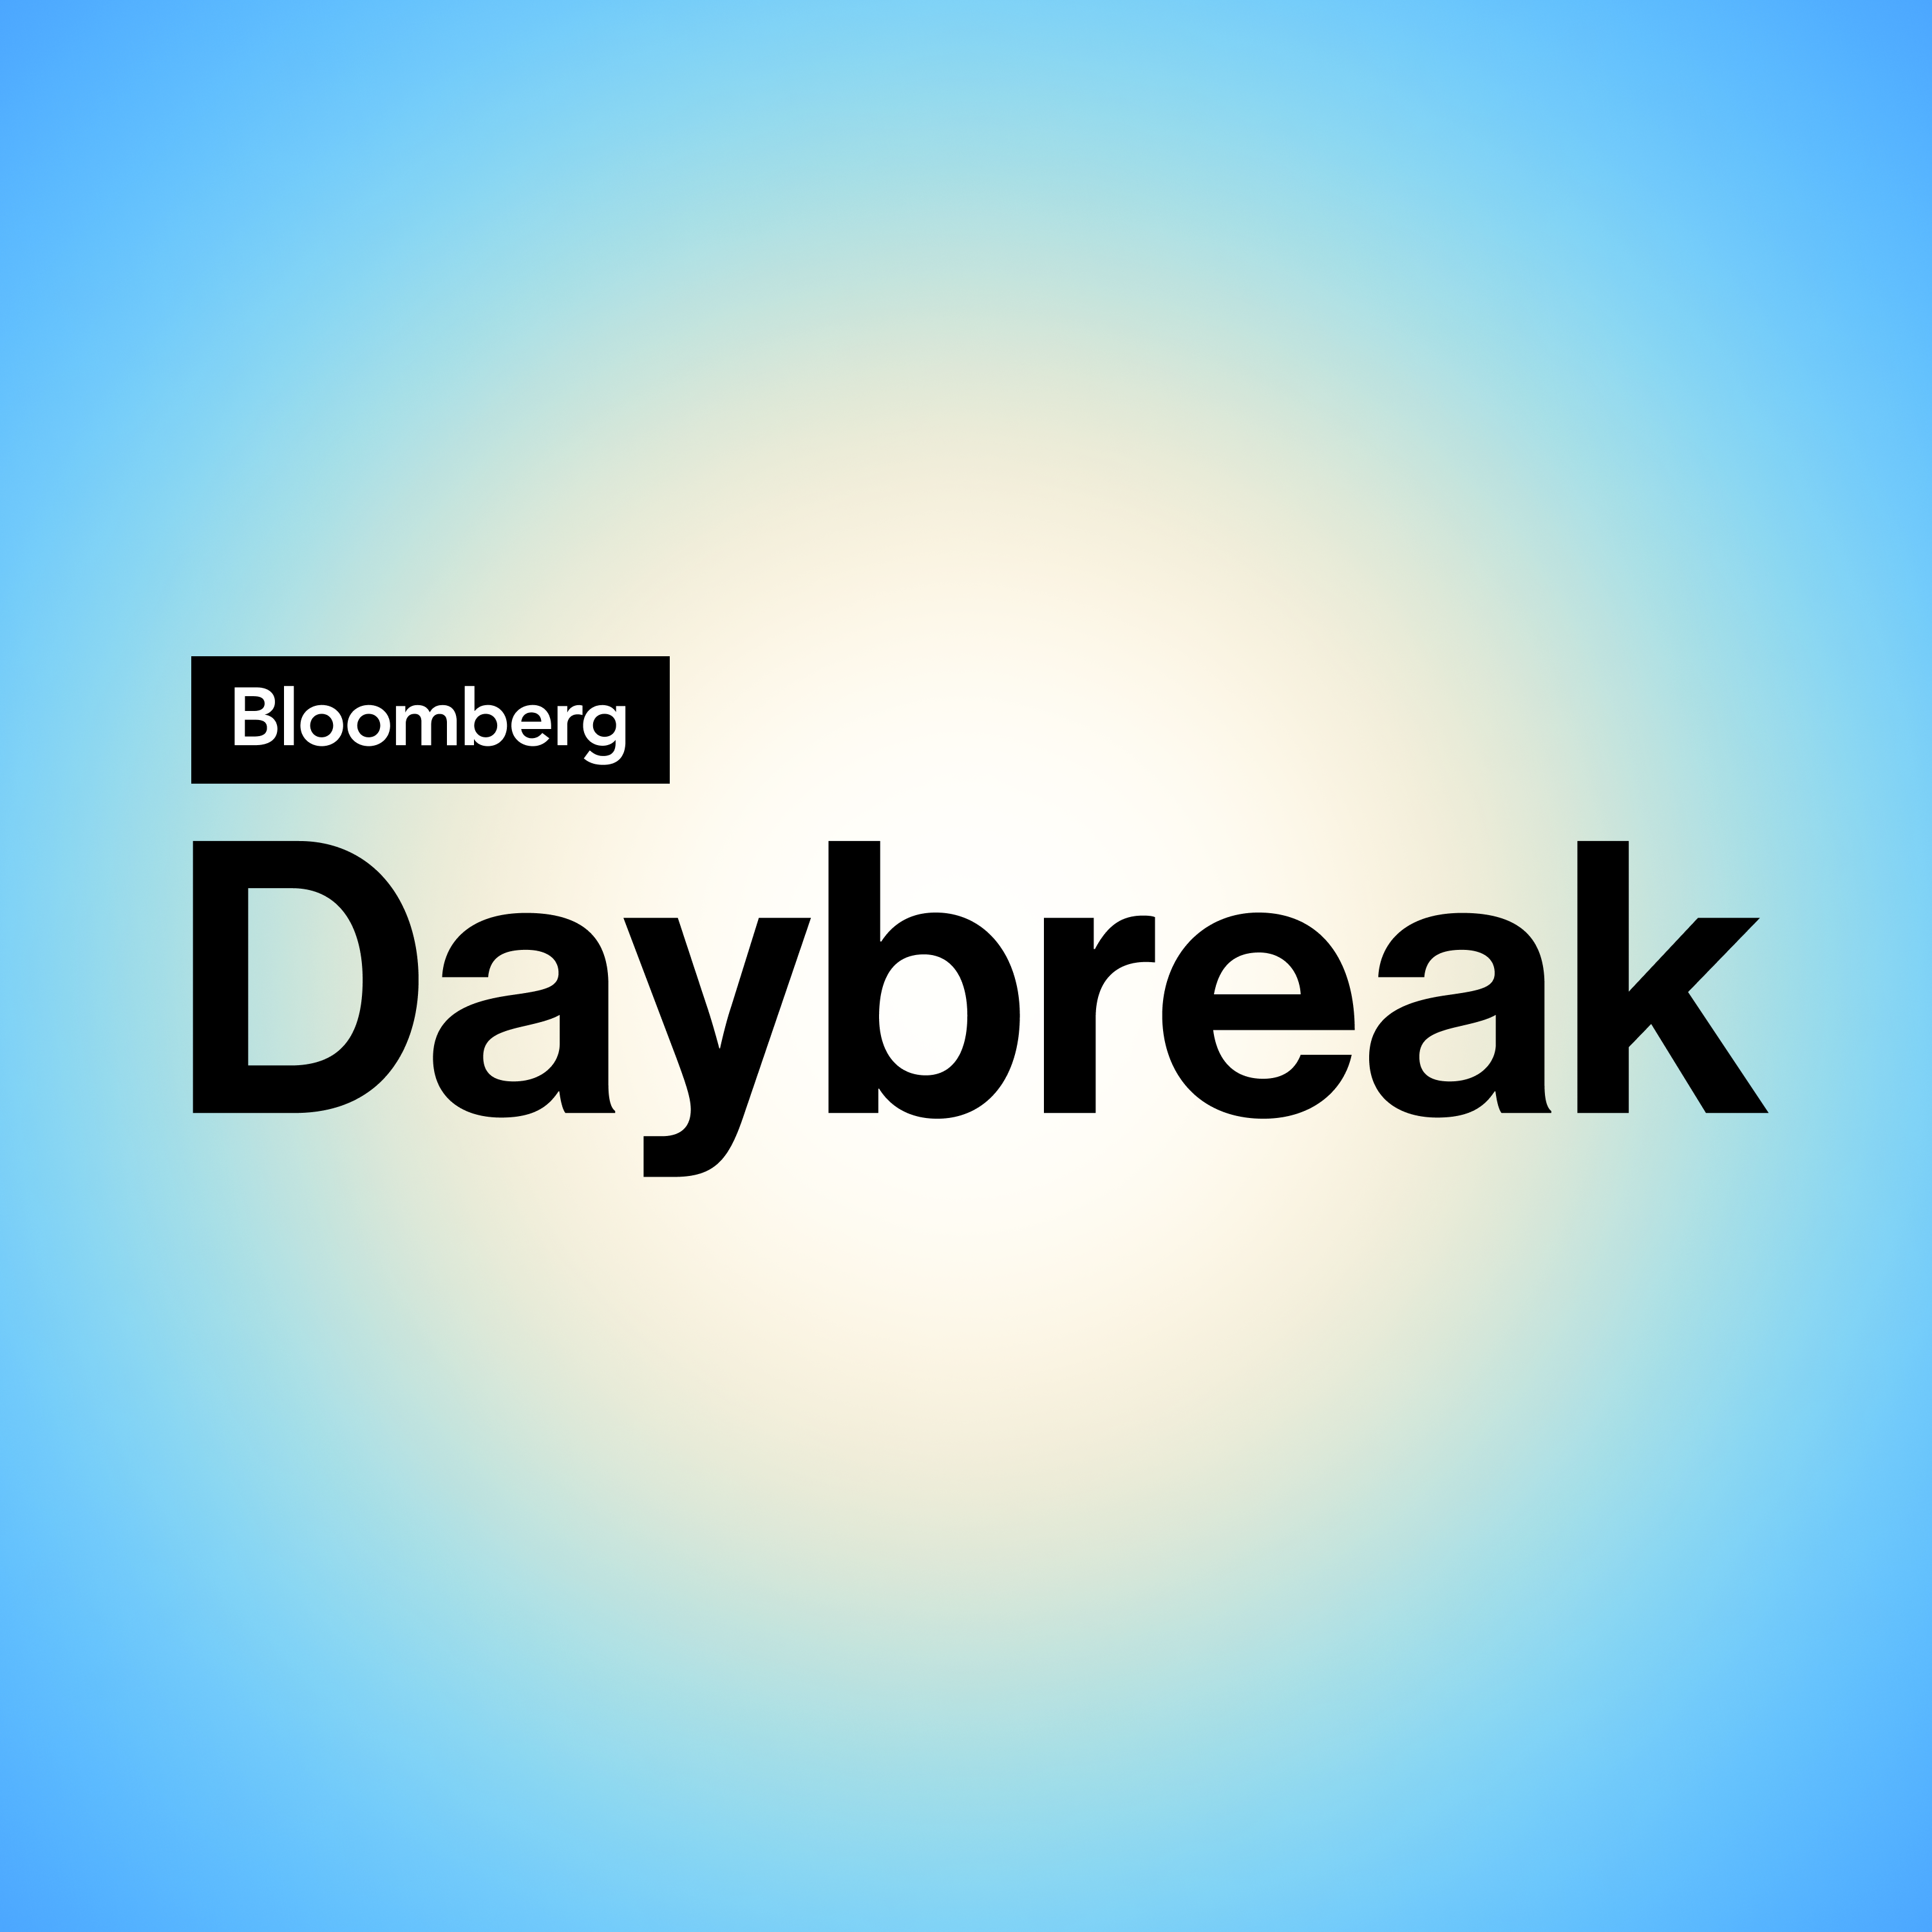 Daybreak Weekend: Nvidia Earnings, Fed Minutes, Fashion Week